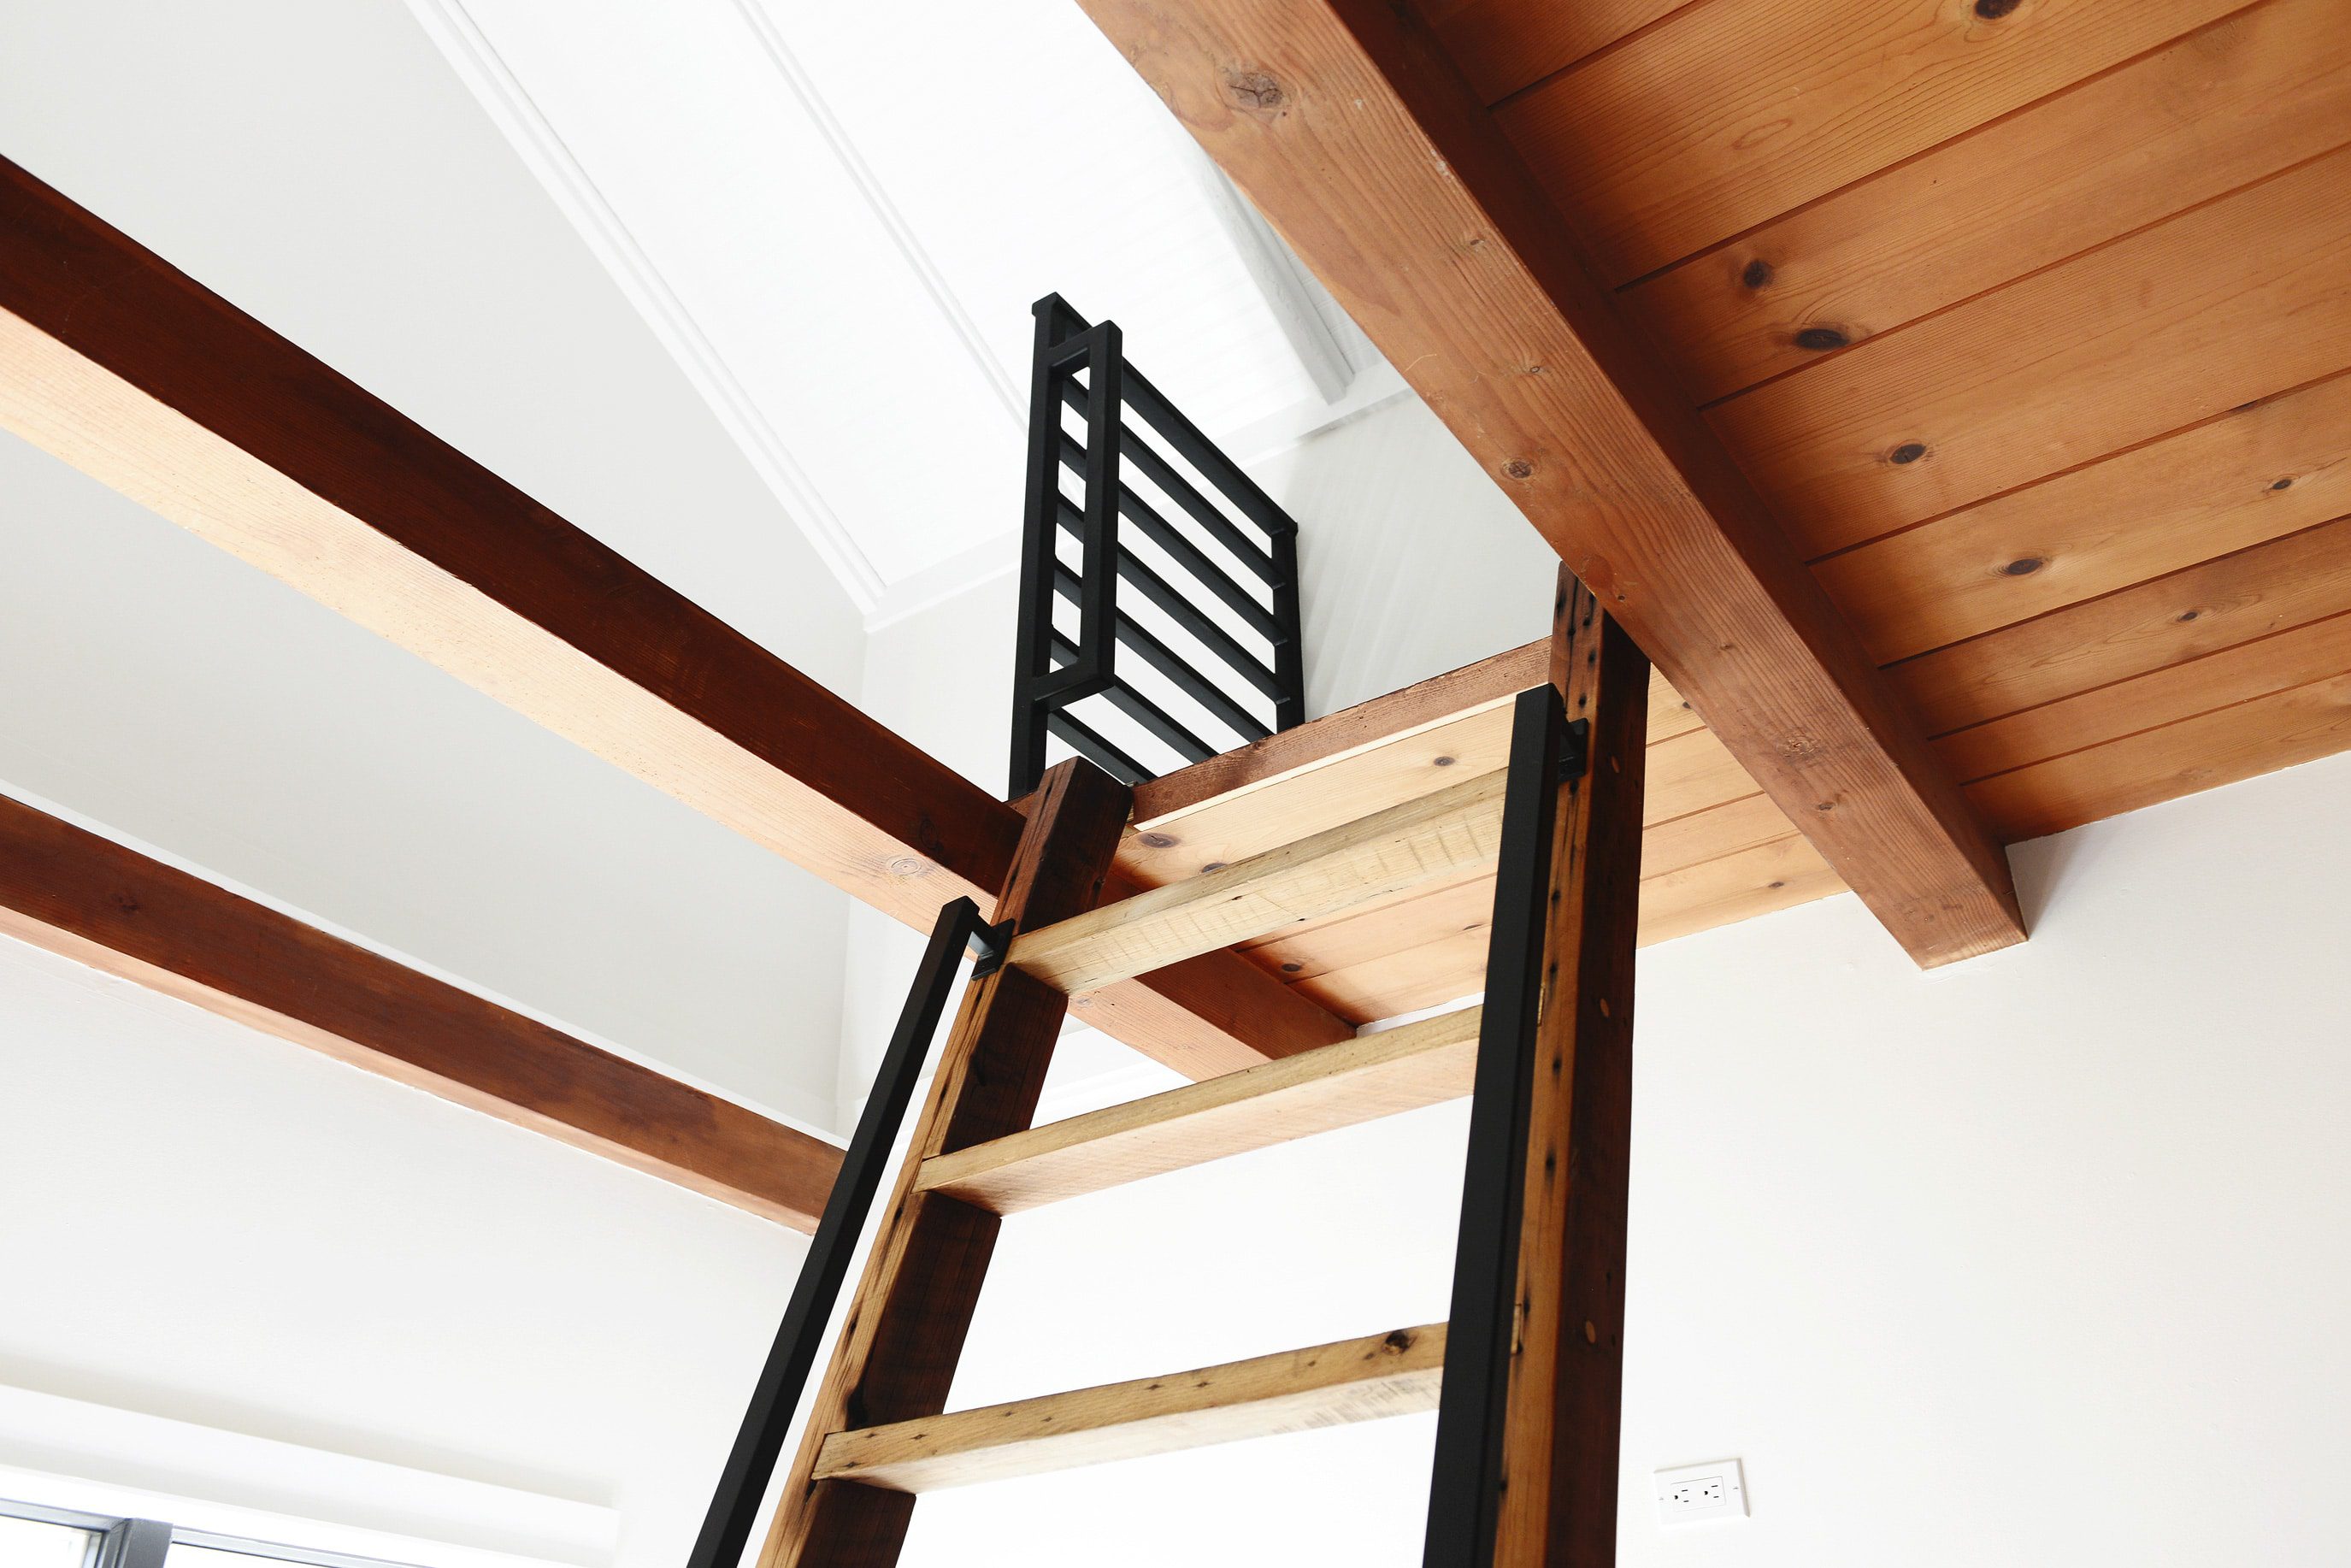 A modern horizontal railing for a kids' sleeping loft | lake house inspiration | via Yellow Brick Home